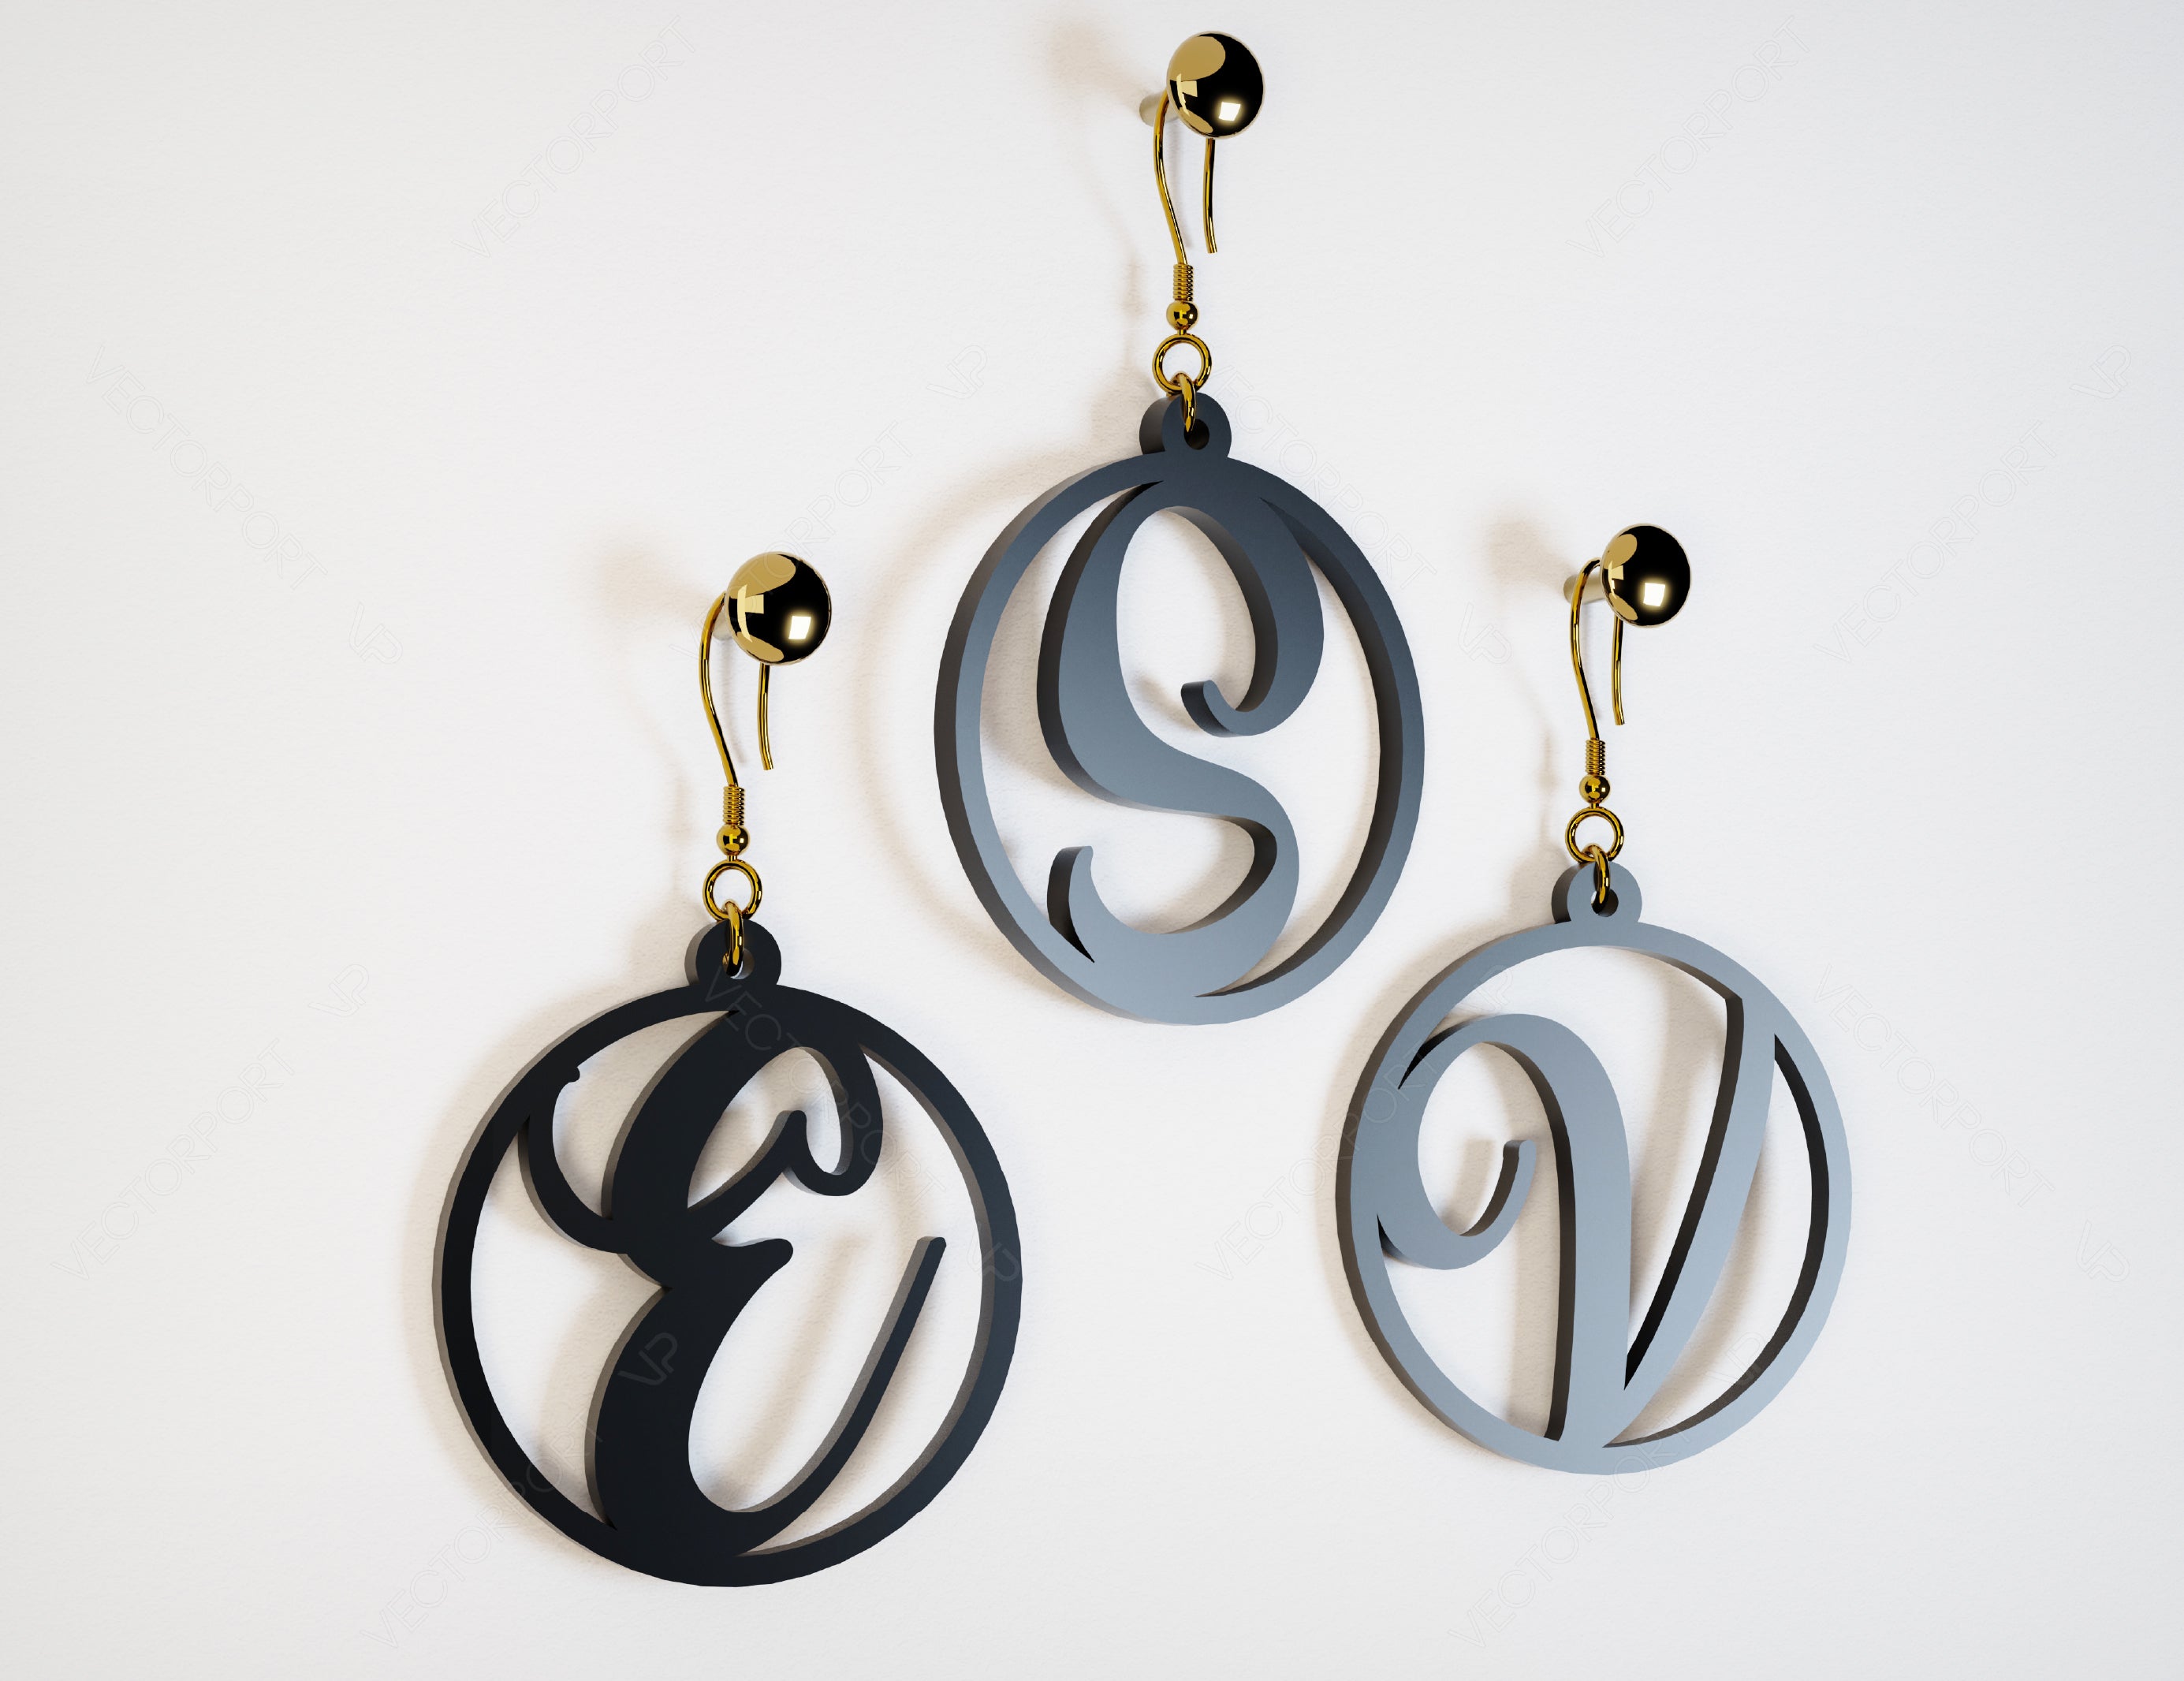 Alphabet Earrings Craft Jewelry Pendants Set Drop Laser cut Earrings SVG Template Silhouette Cut Files, Cricut Cut Files |#U016|